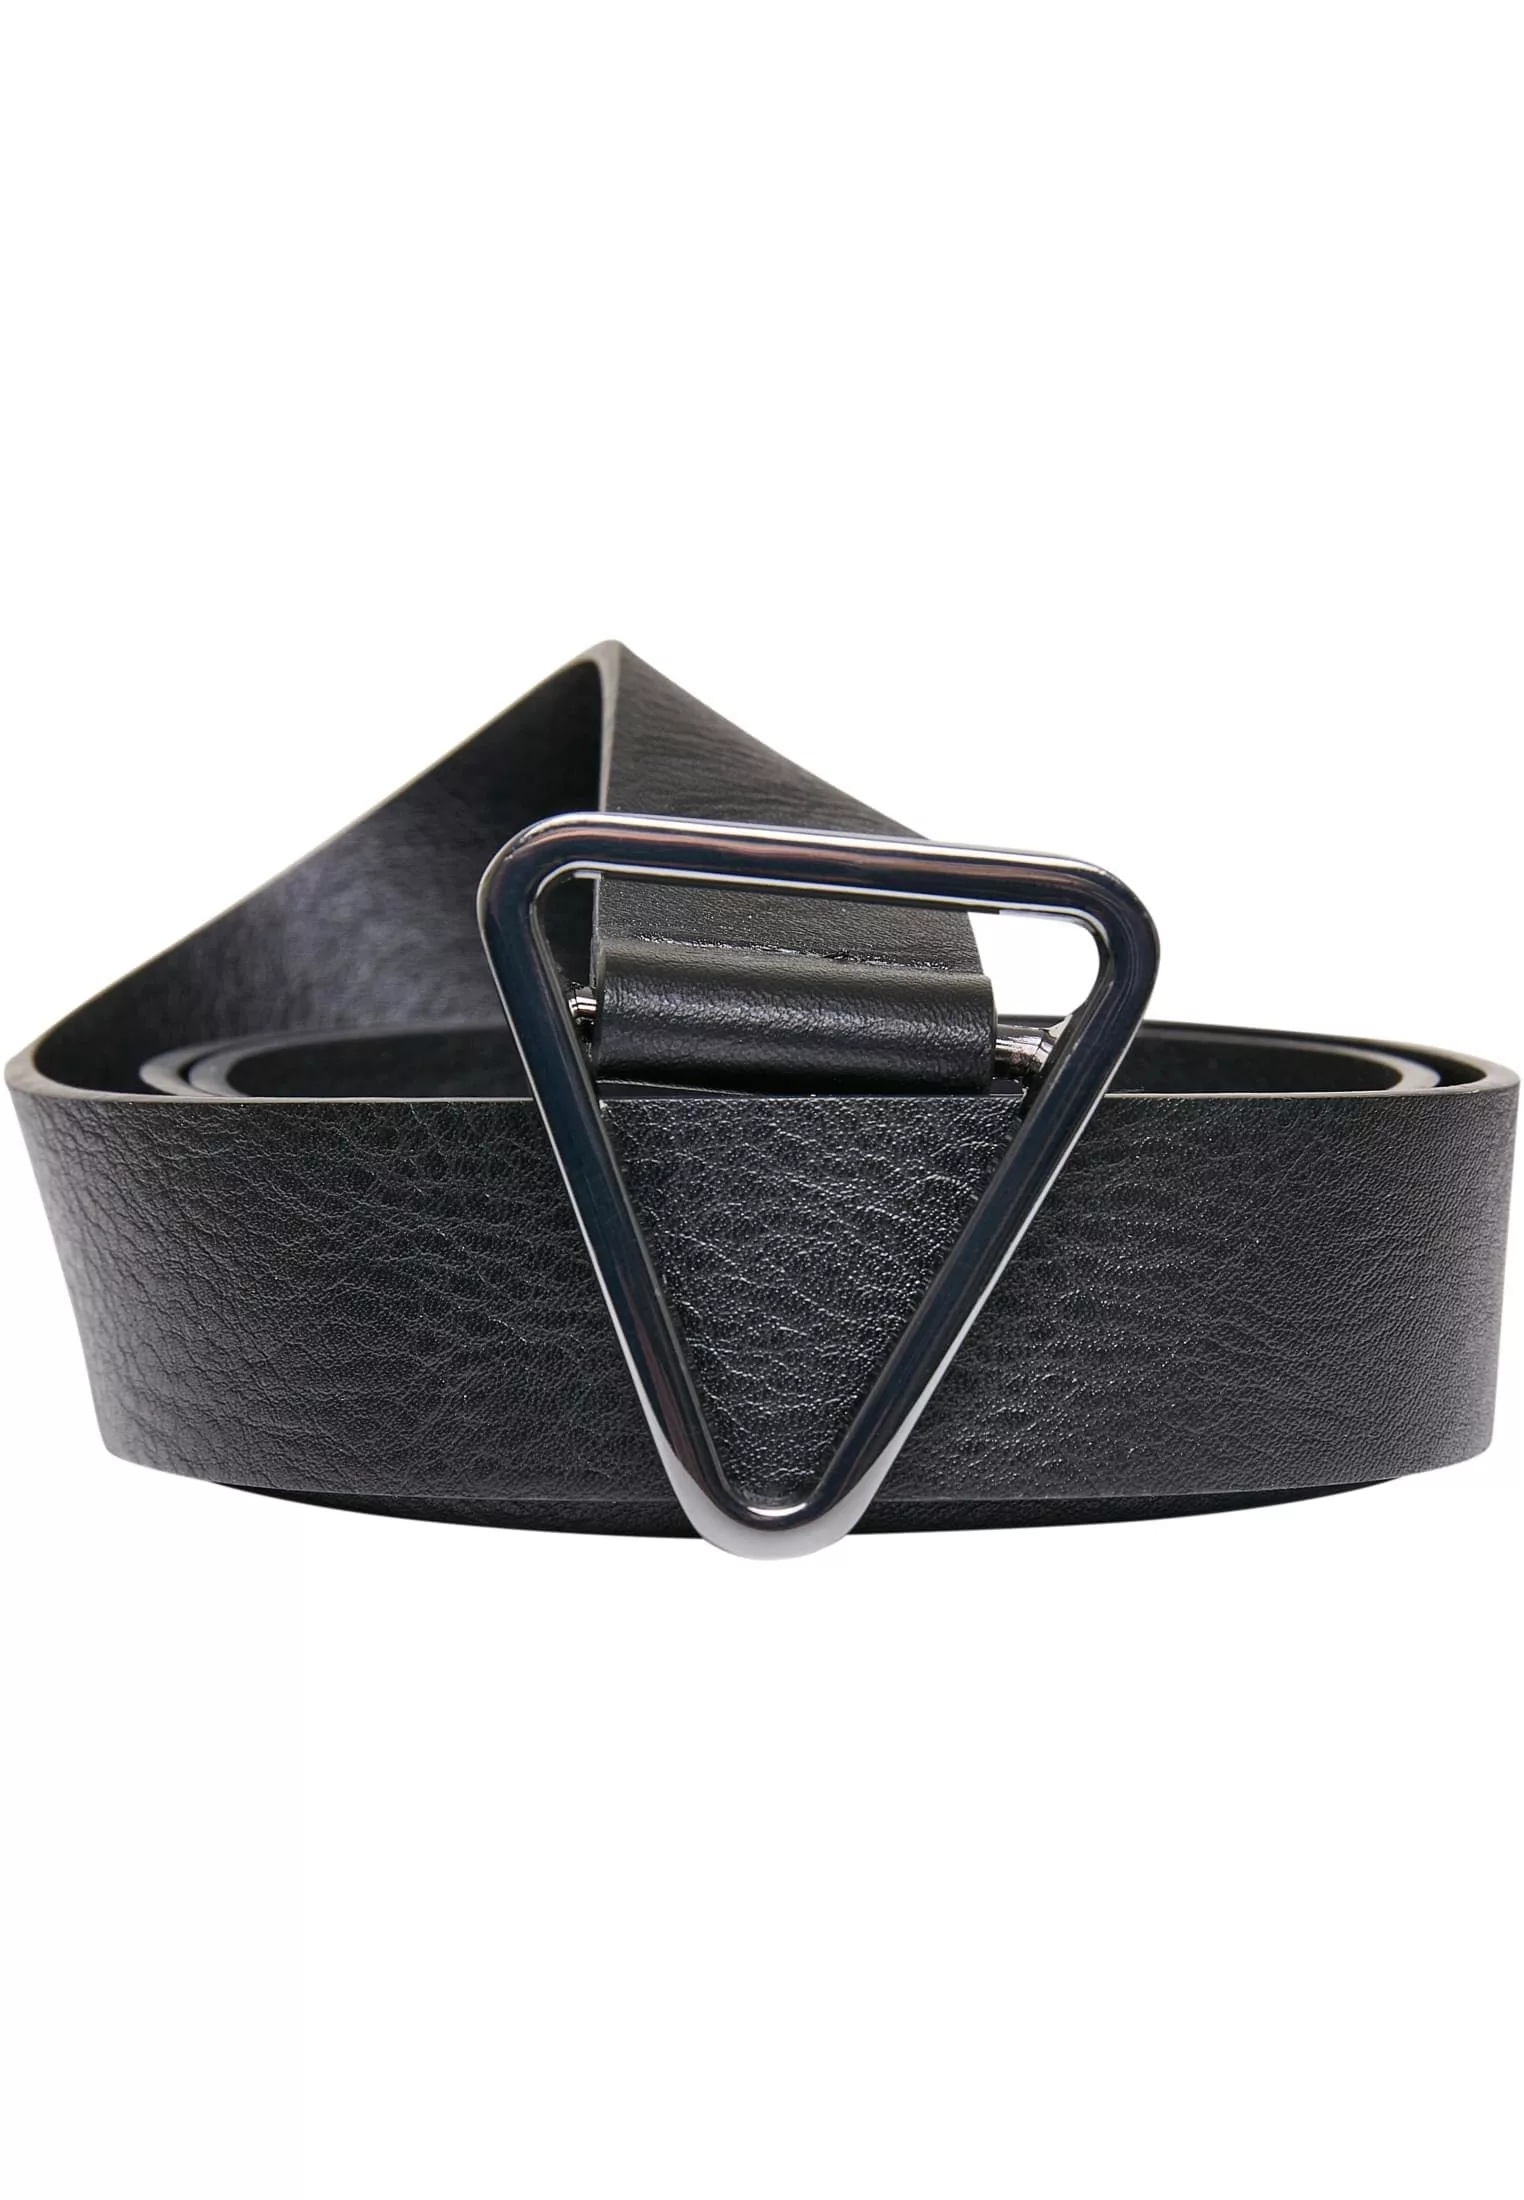 URBAN CLASSICS Hüftgürtel "Accessoires Synthetic Leather Triangle Buckle Be günstig online kaufen